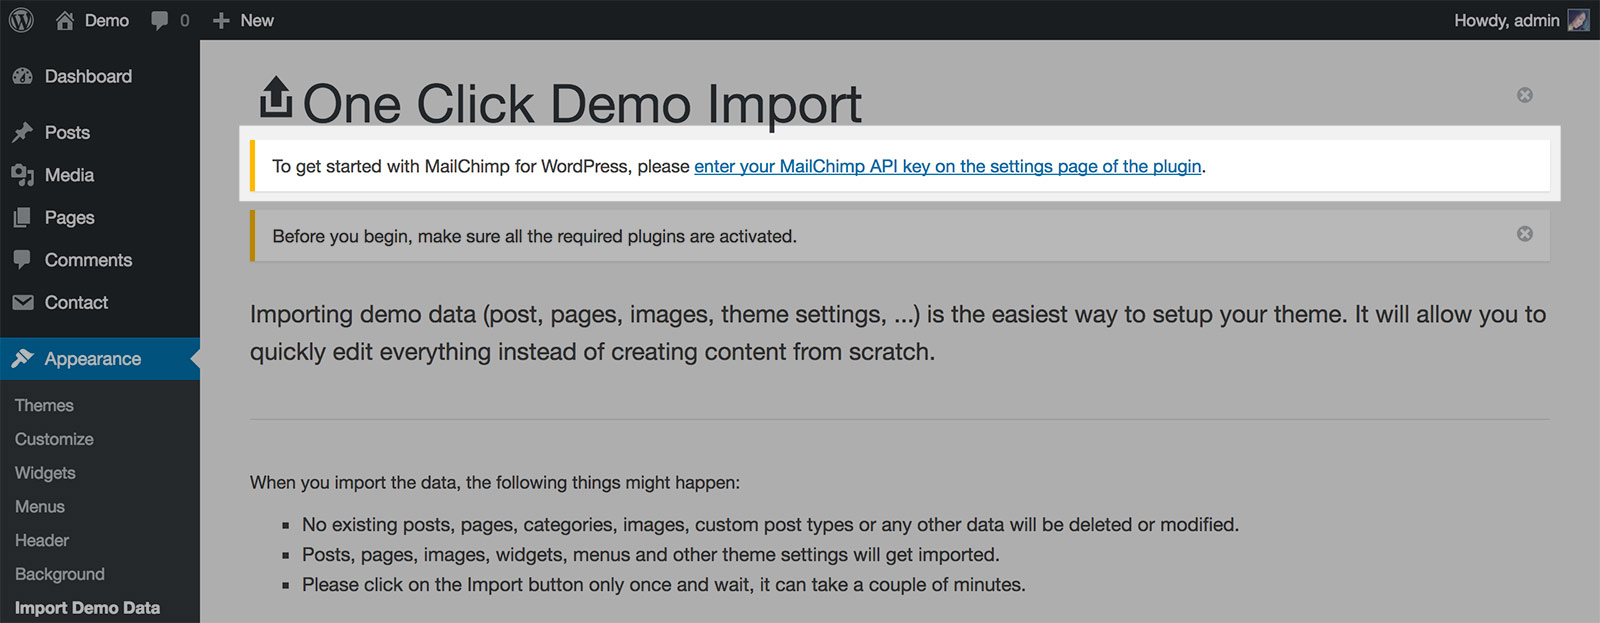 Demo Import - Setup MailChimp for WordPress